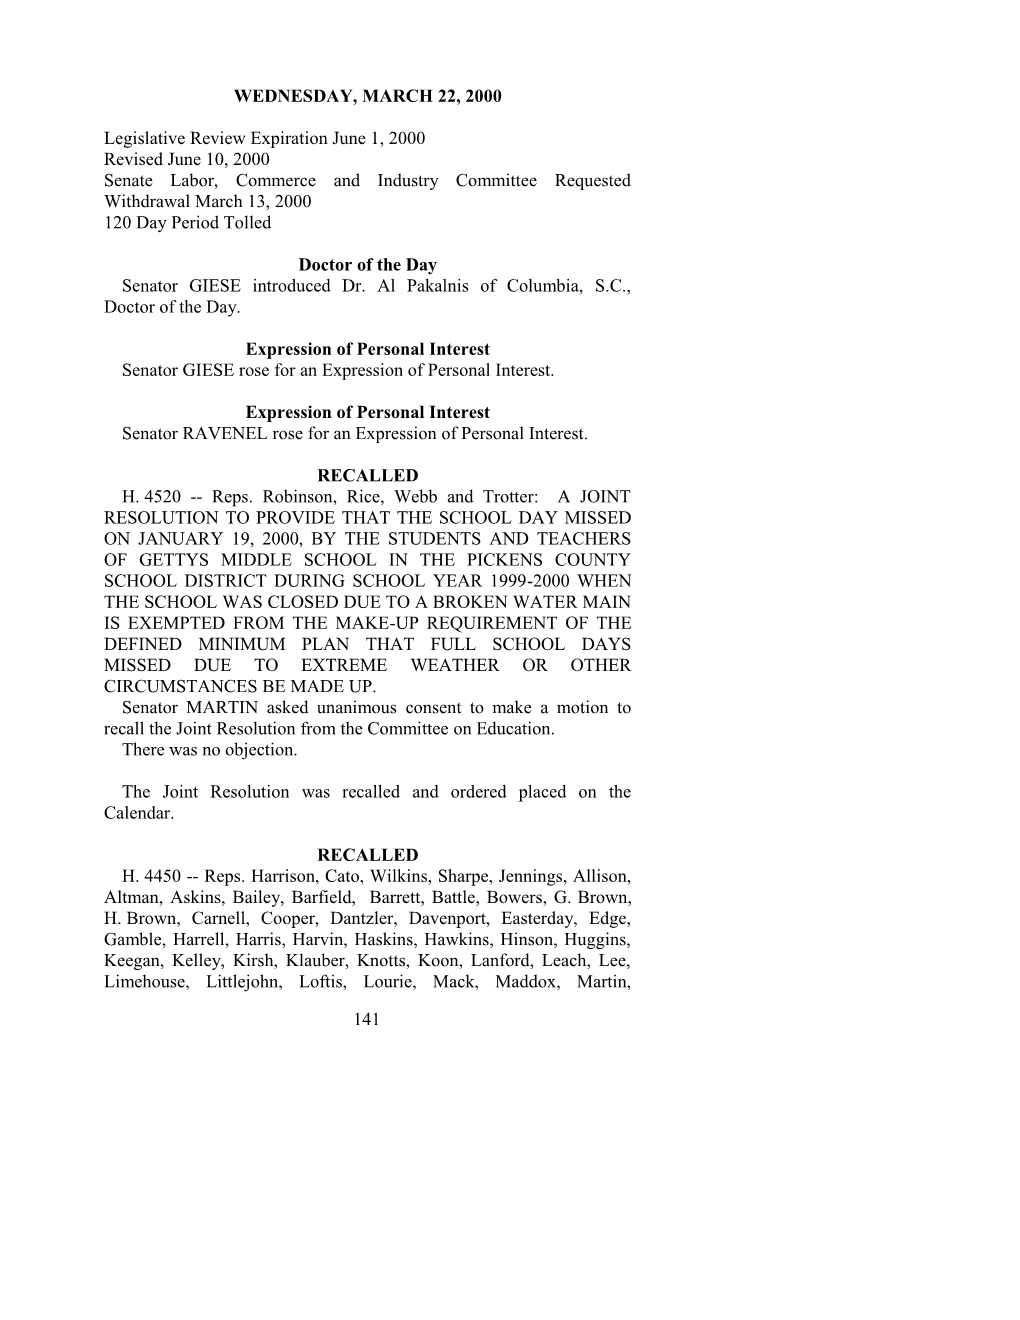 Senate Journal for Mar. 22, 2000 - South Carolina Legislature Online